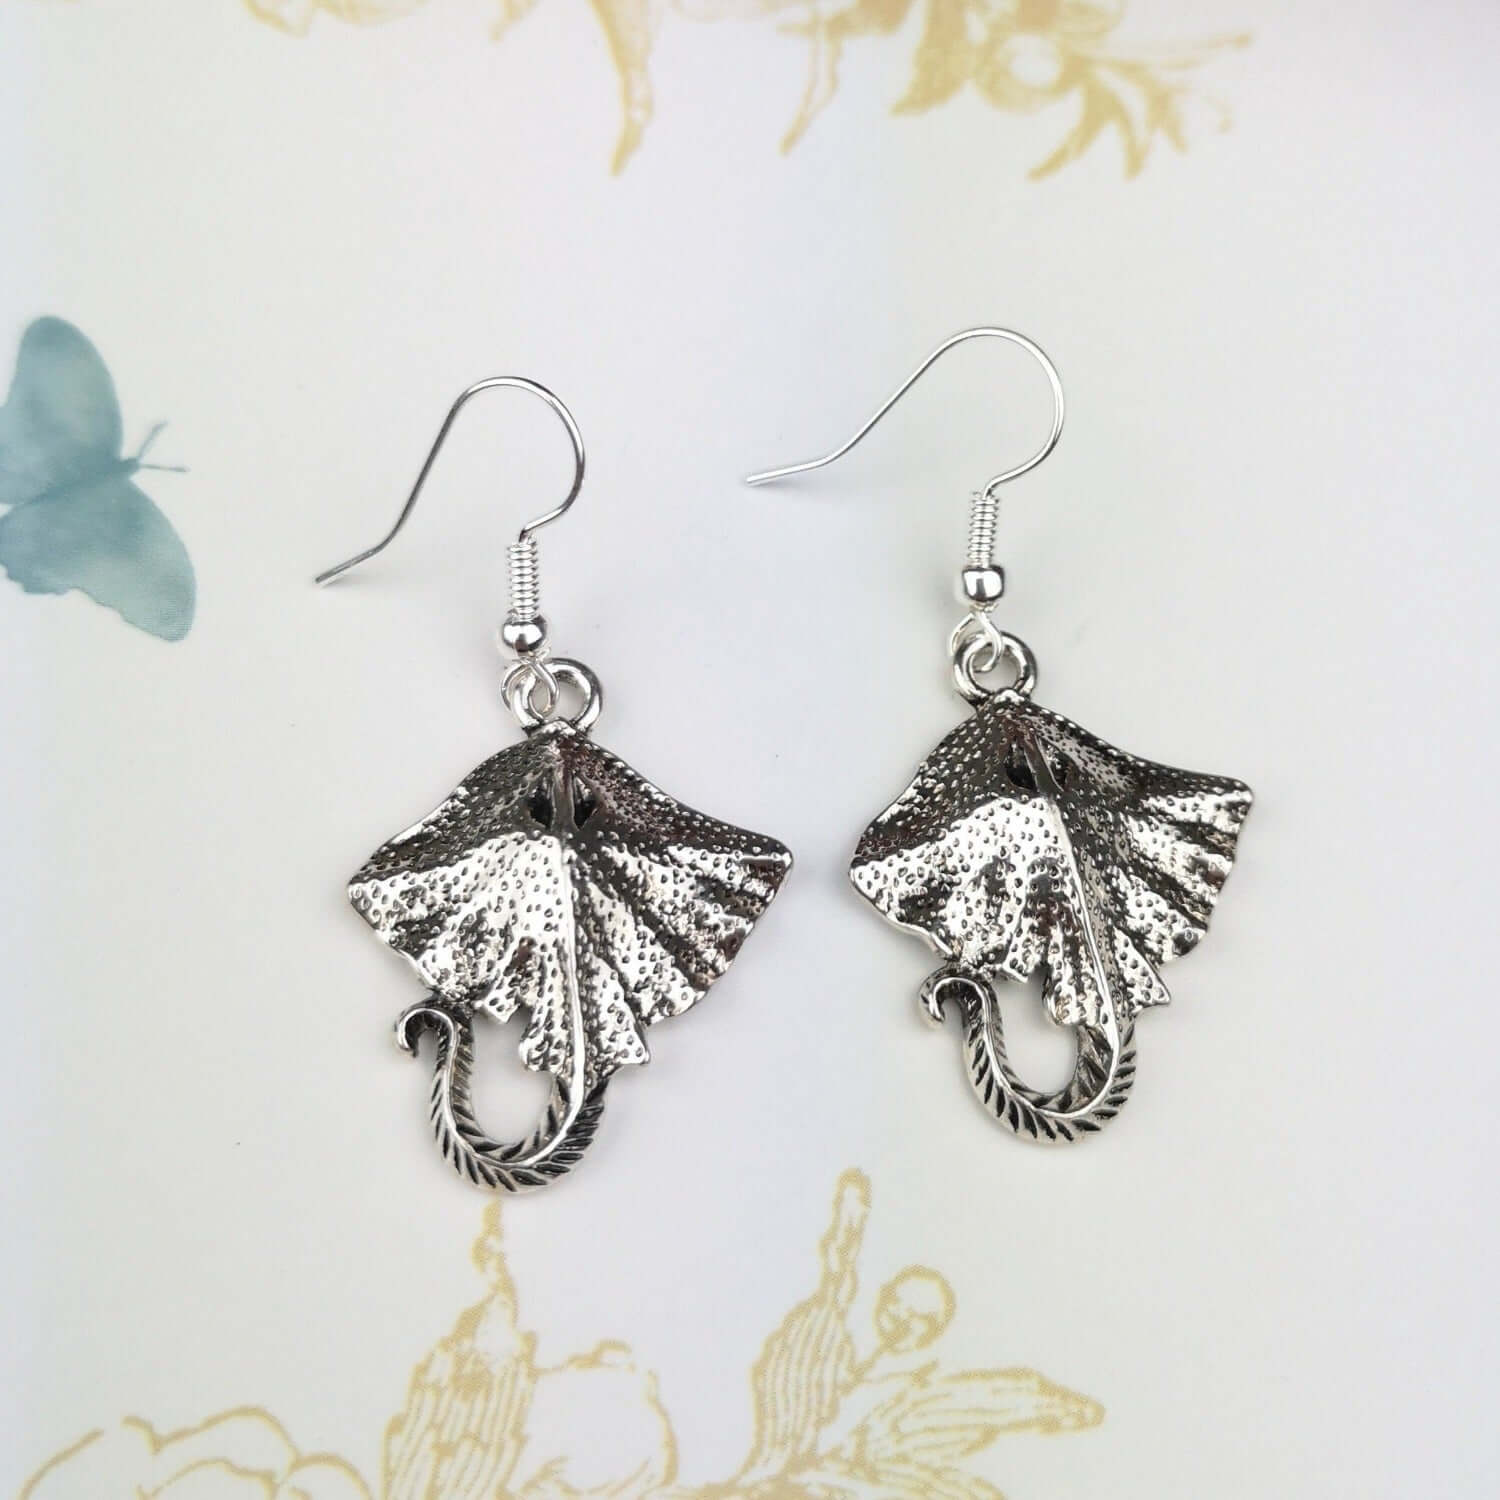 manta ray silver earrings dangle drop